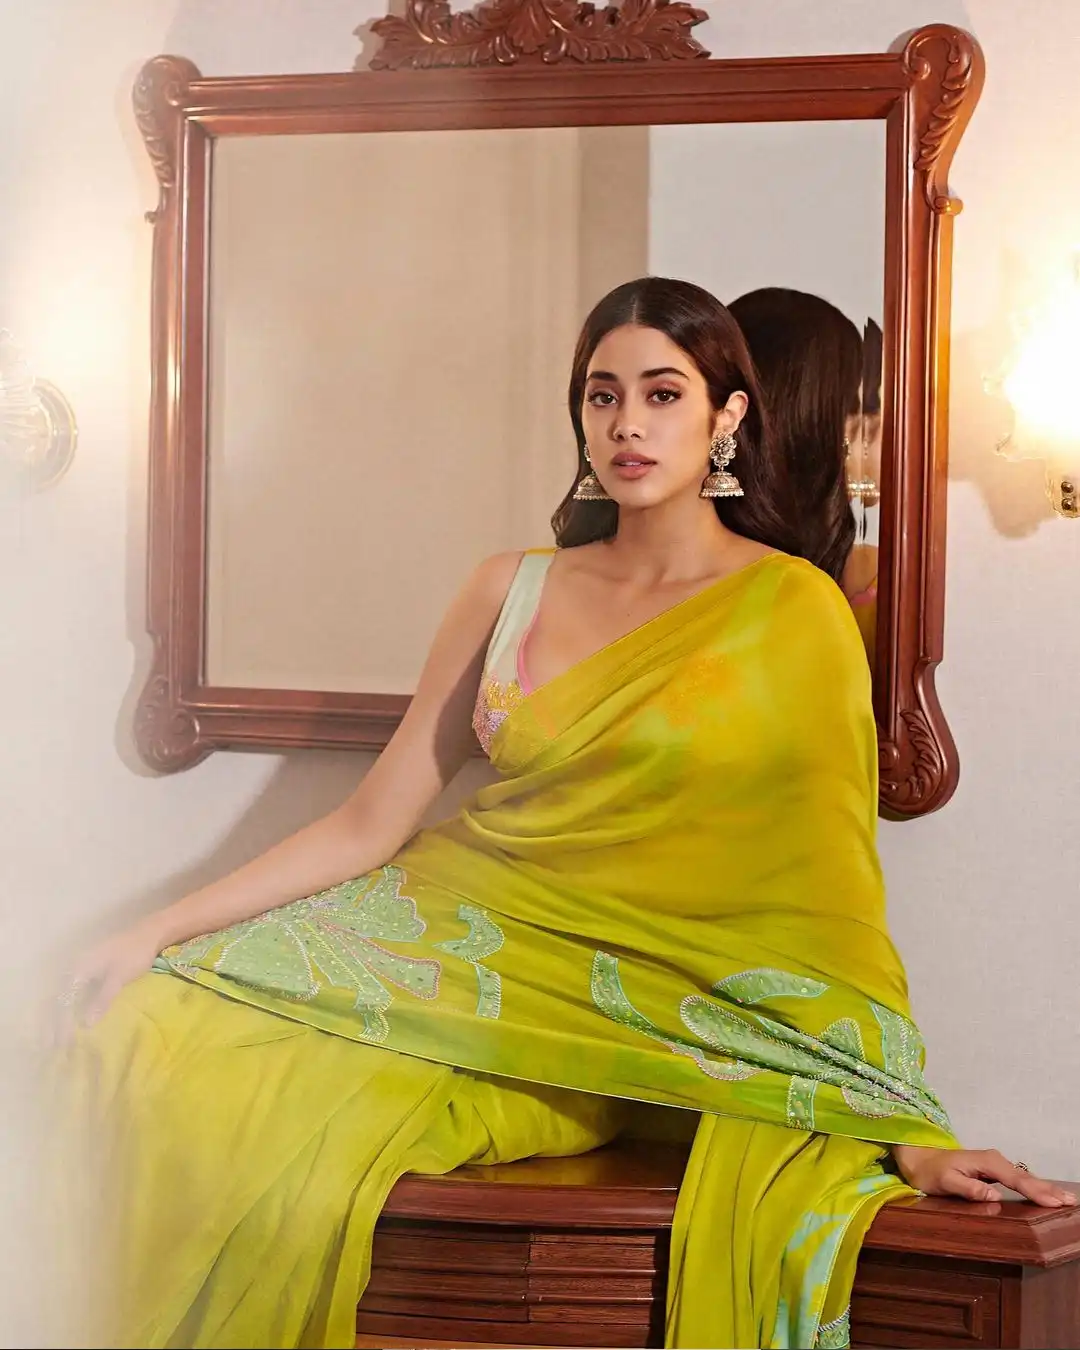 Janhvi Kapoor In Saree Will Stun You